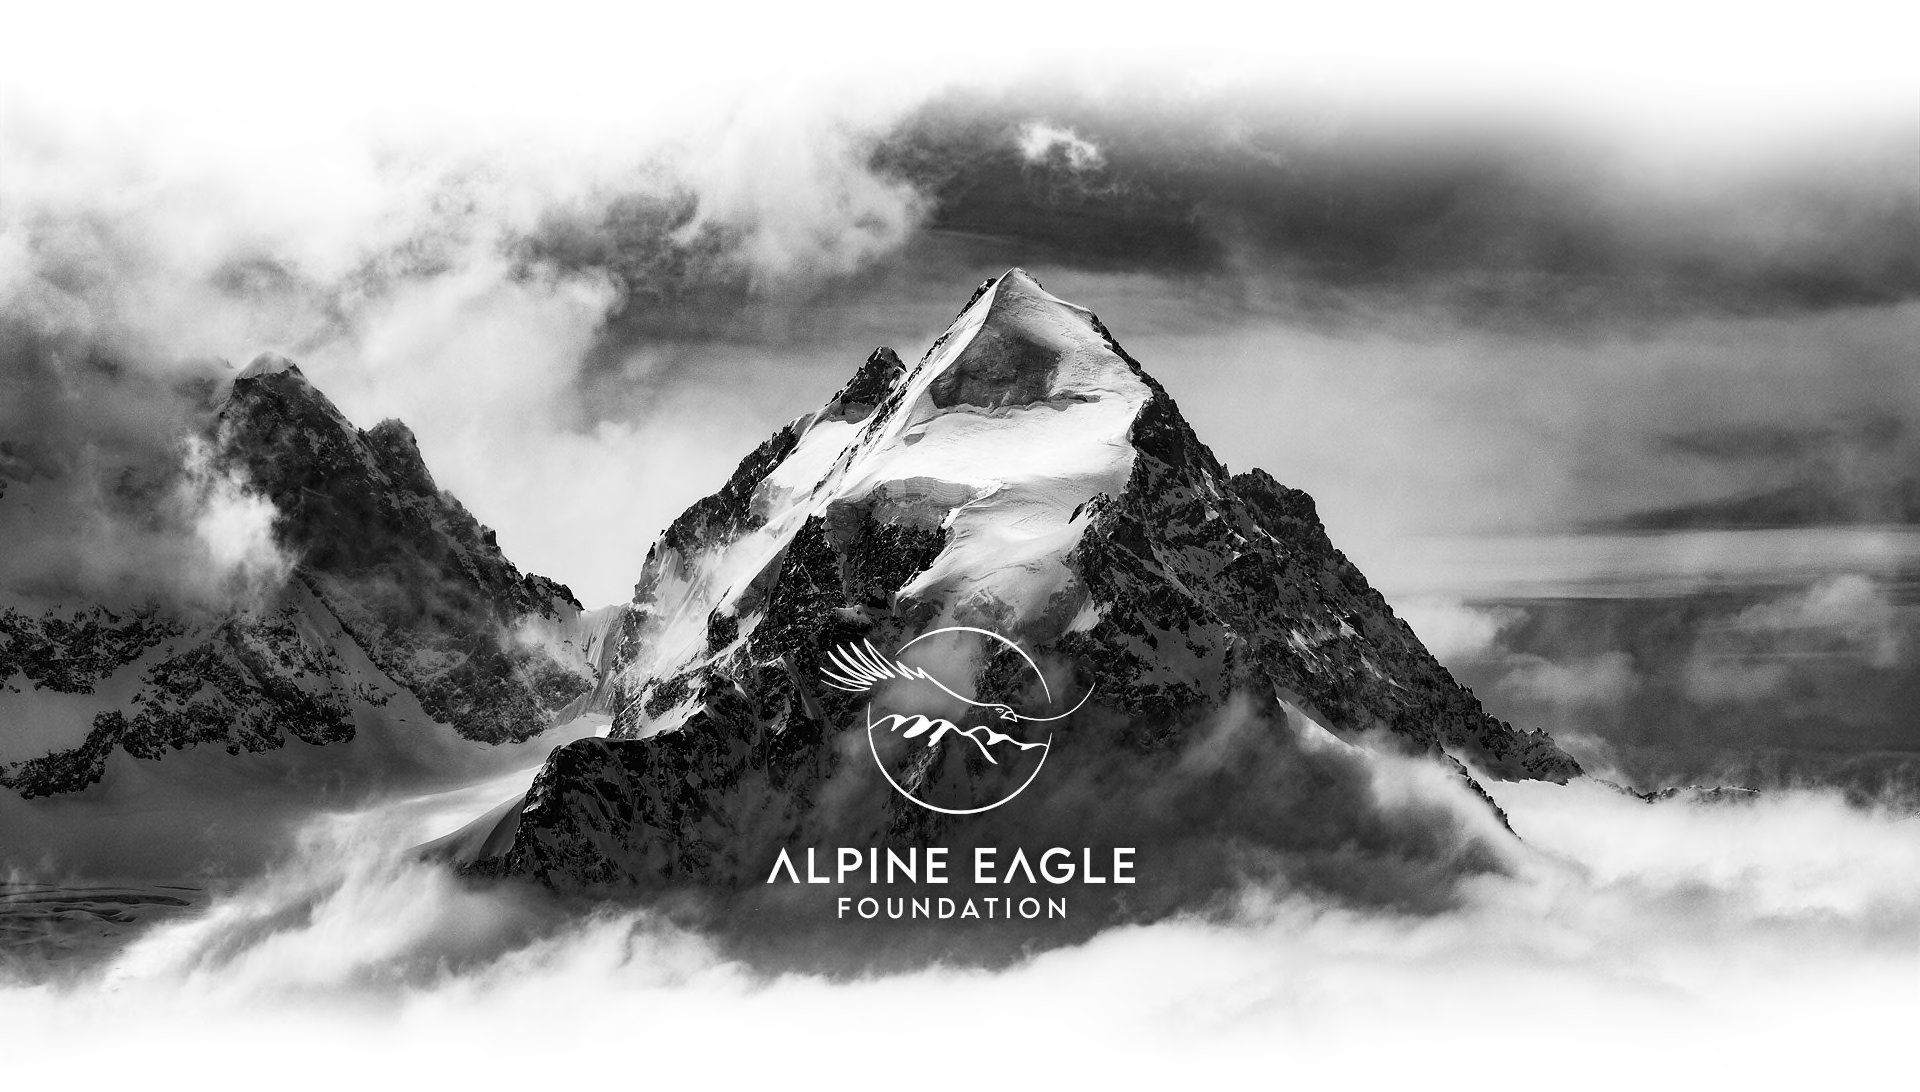 Alpine Eagle Foundation